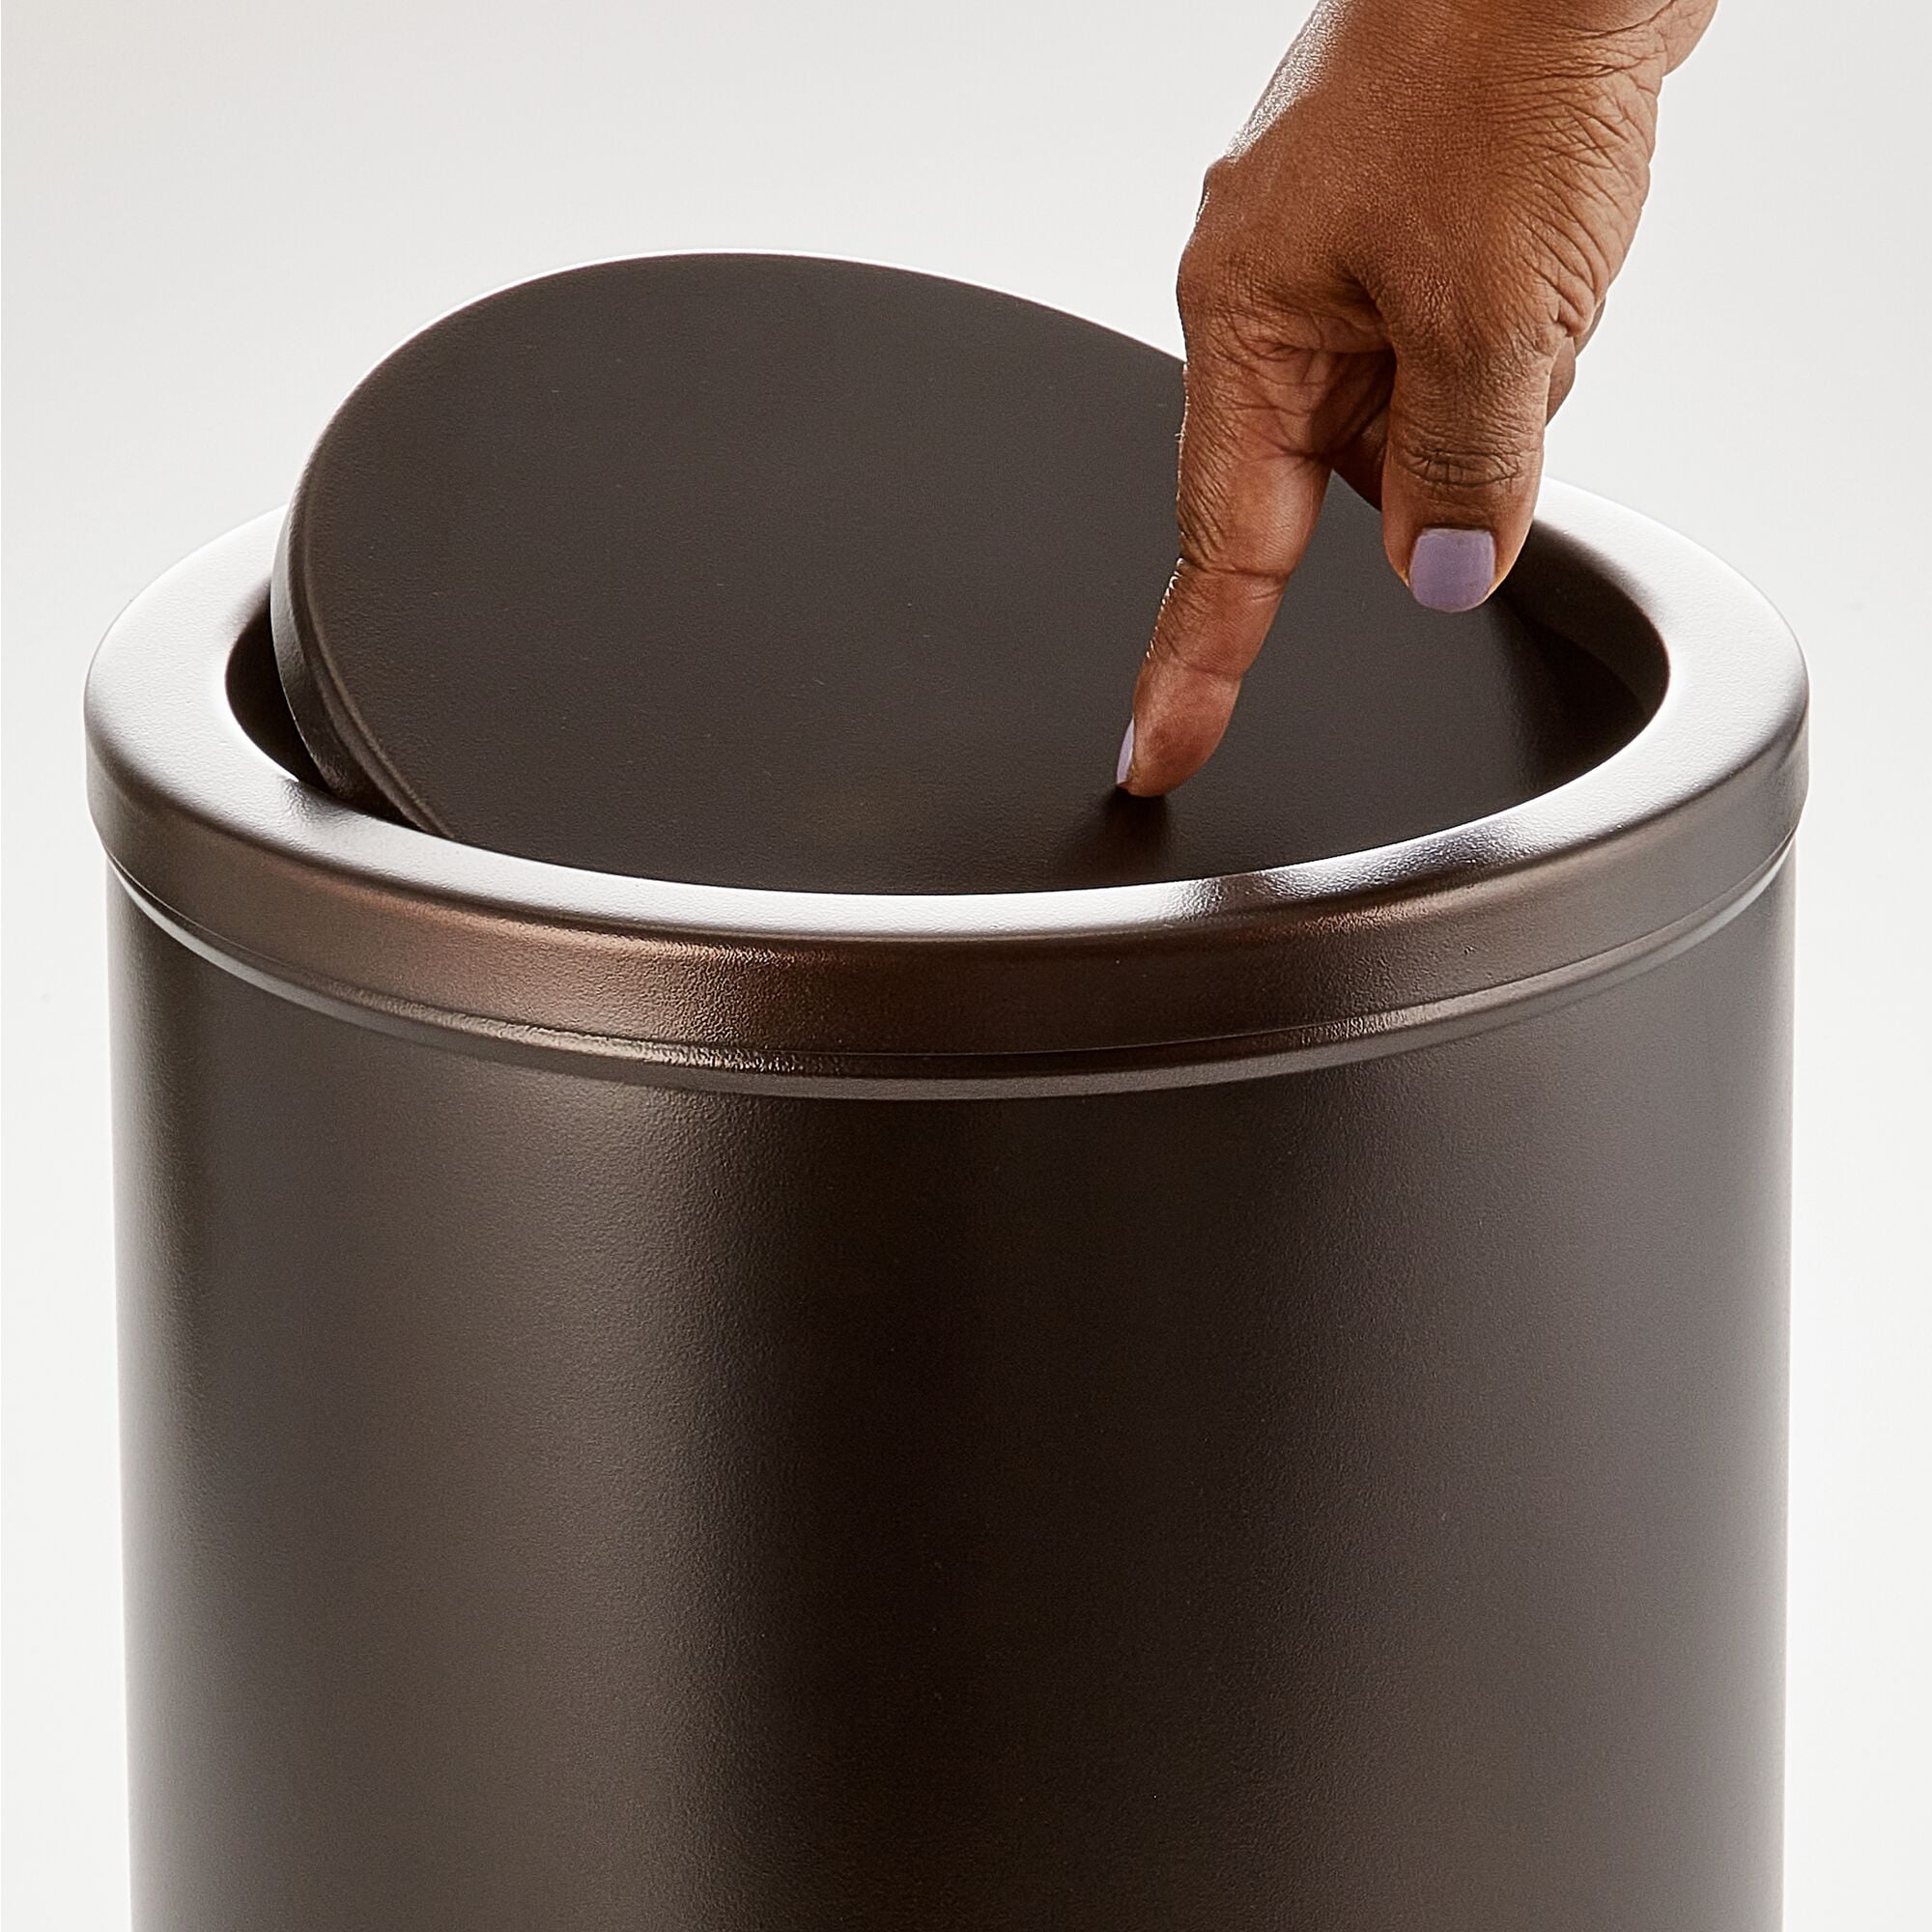 mDesign Small Round Metal 4.8 Gallon Covered Bathroom Garbage Swing Lid  Trash Can Waste Basket Bin for Bathroom, Bedroom, Kitchen, Craft Room,  Office, Laundry Room, Garage - Bronze 45.99 - Quarter Price